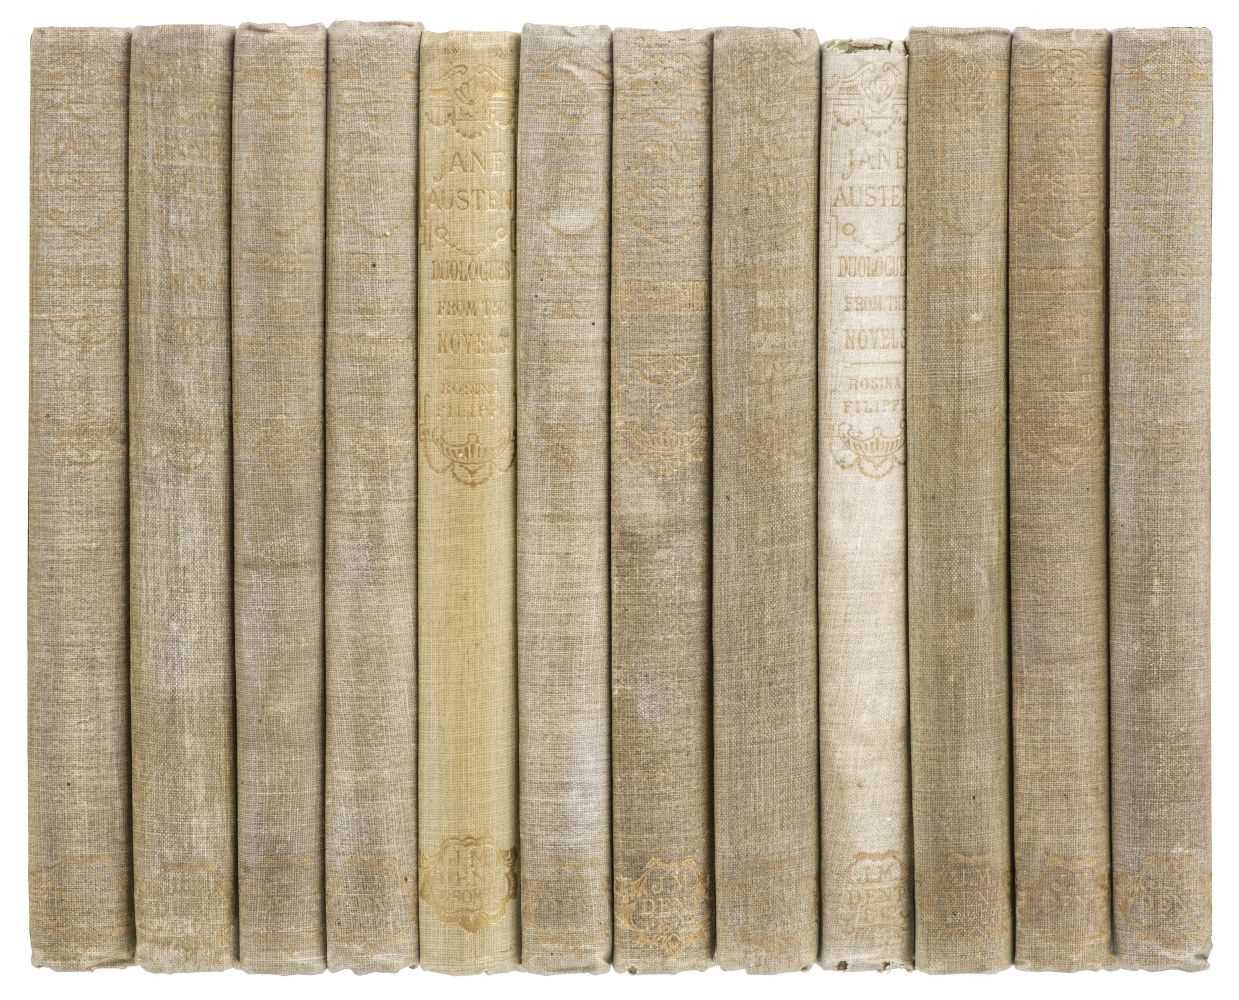 Lot 599 - Austen (Jane). Novels, 1st edition thus, 12 novels, London: J.M. Dent, 1892